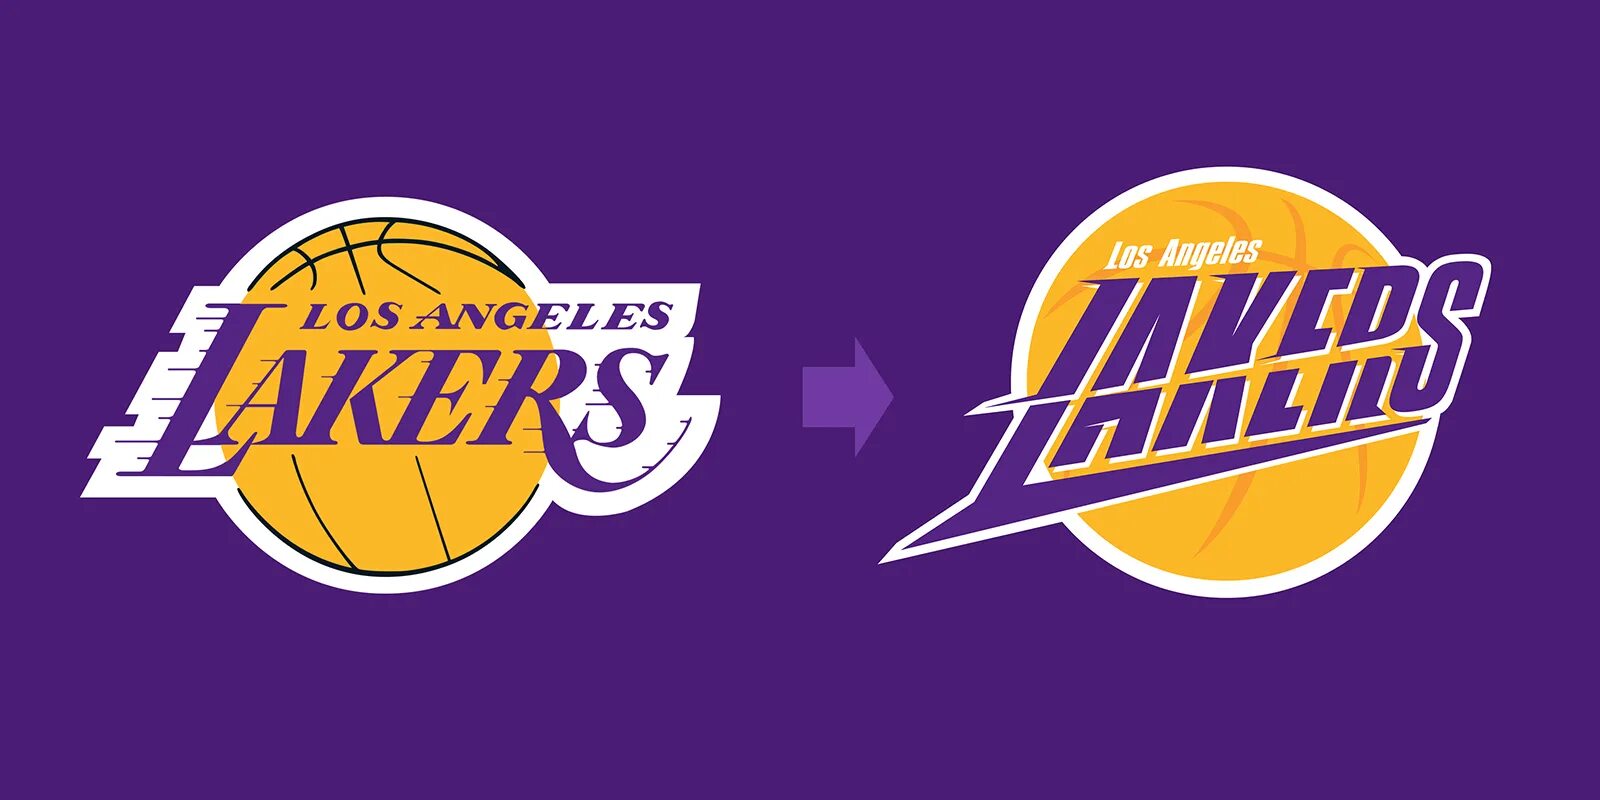 Los angeles 52 текст. Лос Анджелес Лейкерс лого. NBA los Angeles Lakers логотип. Лос-Анджелес Лейкерс надпись. Лого Лос Анджелес Лейкерс svg.